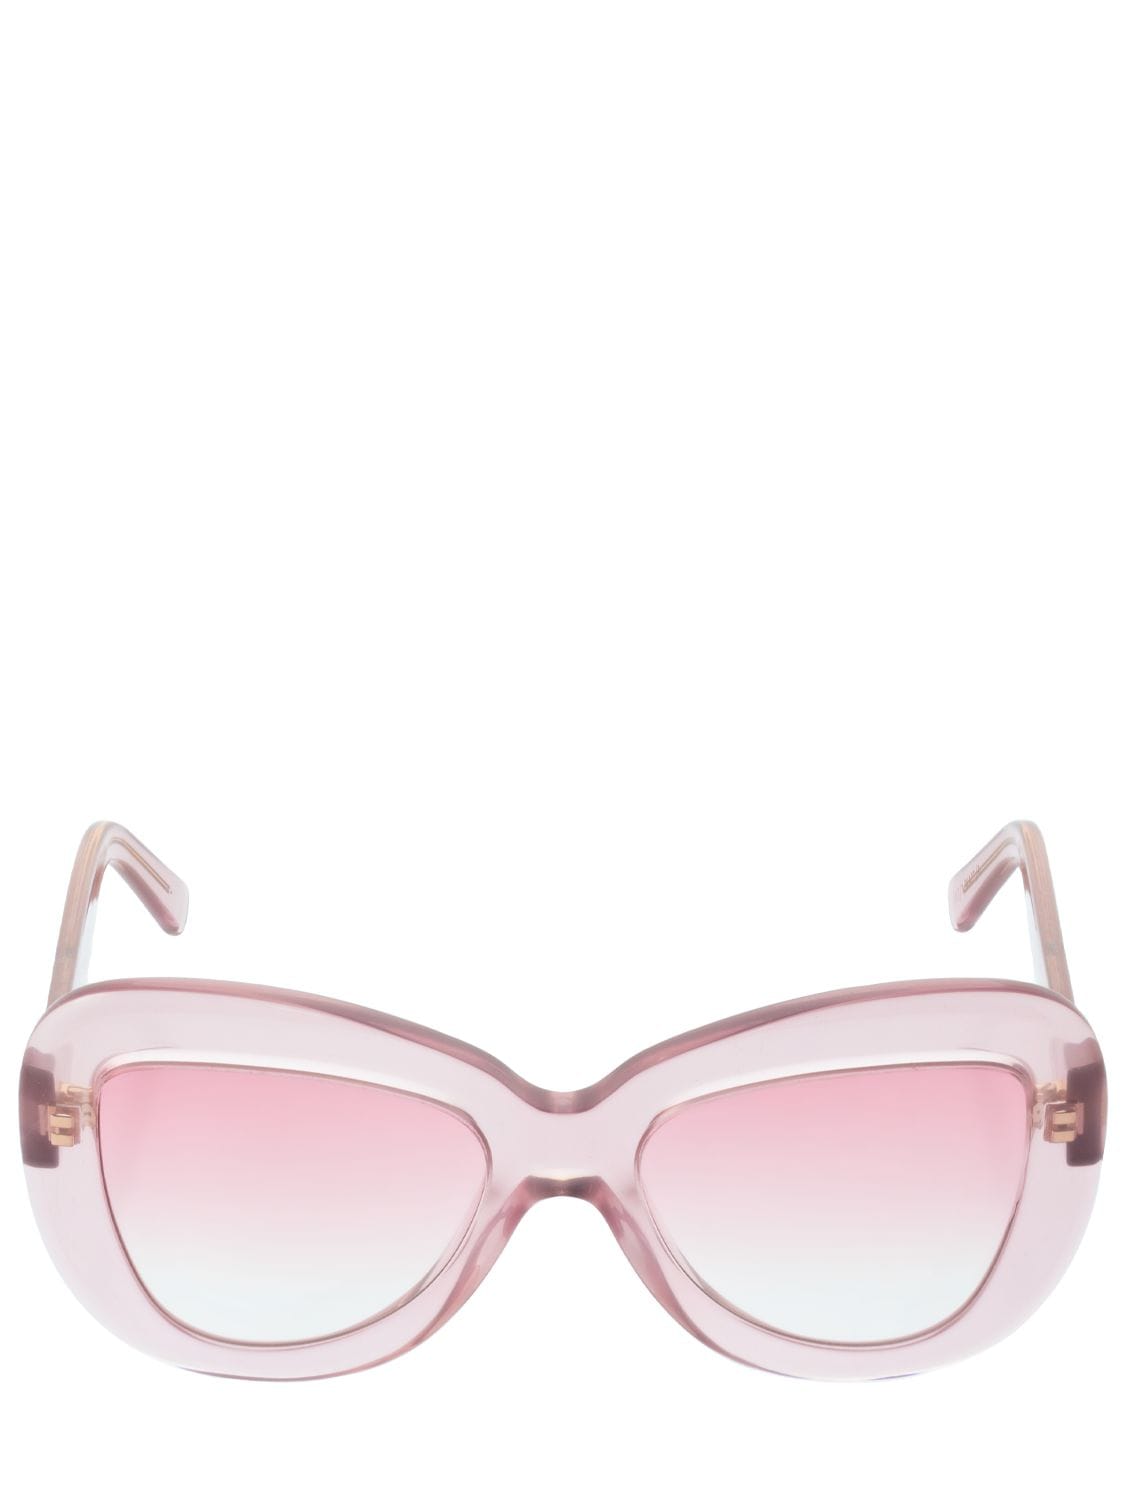 MARNI Sunglasses | ModeSens